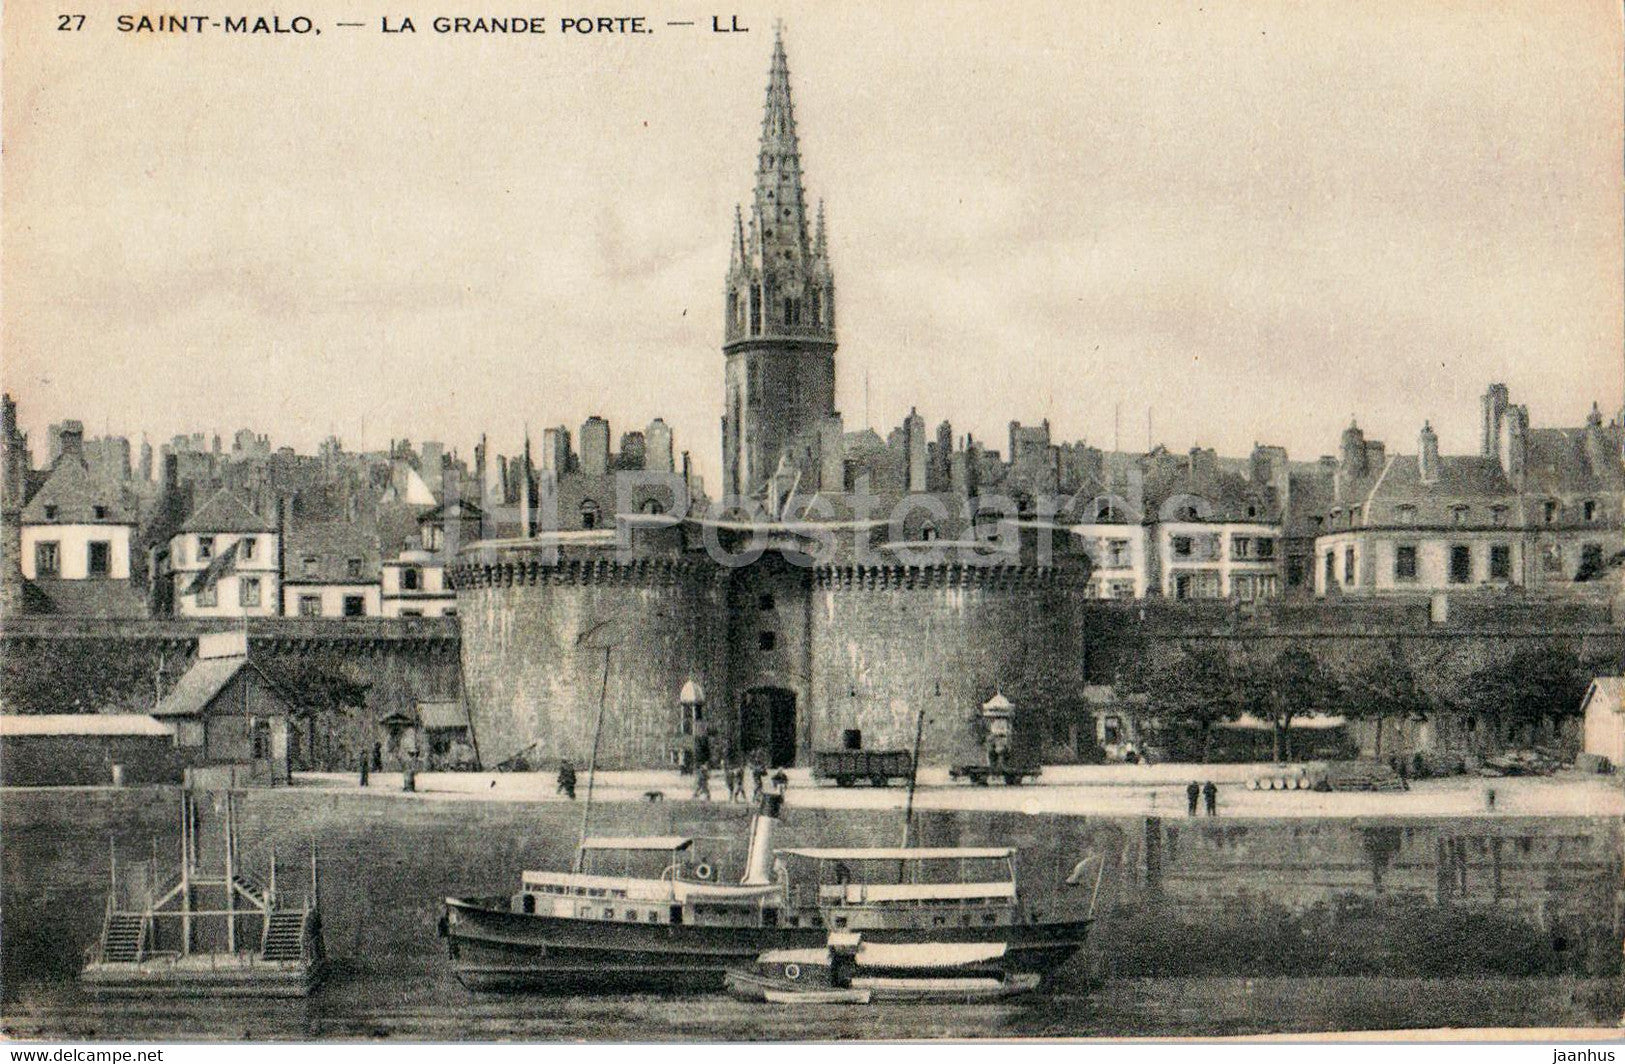 Saint Malo - La Grande Porte - boat - ship - 27 - old postcard - France - unused - JH Postcards